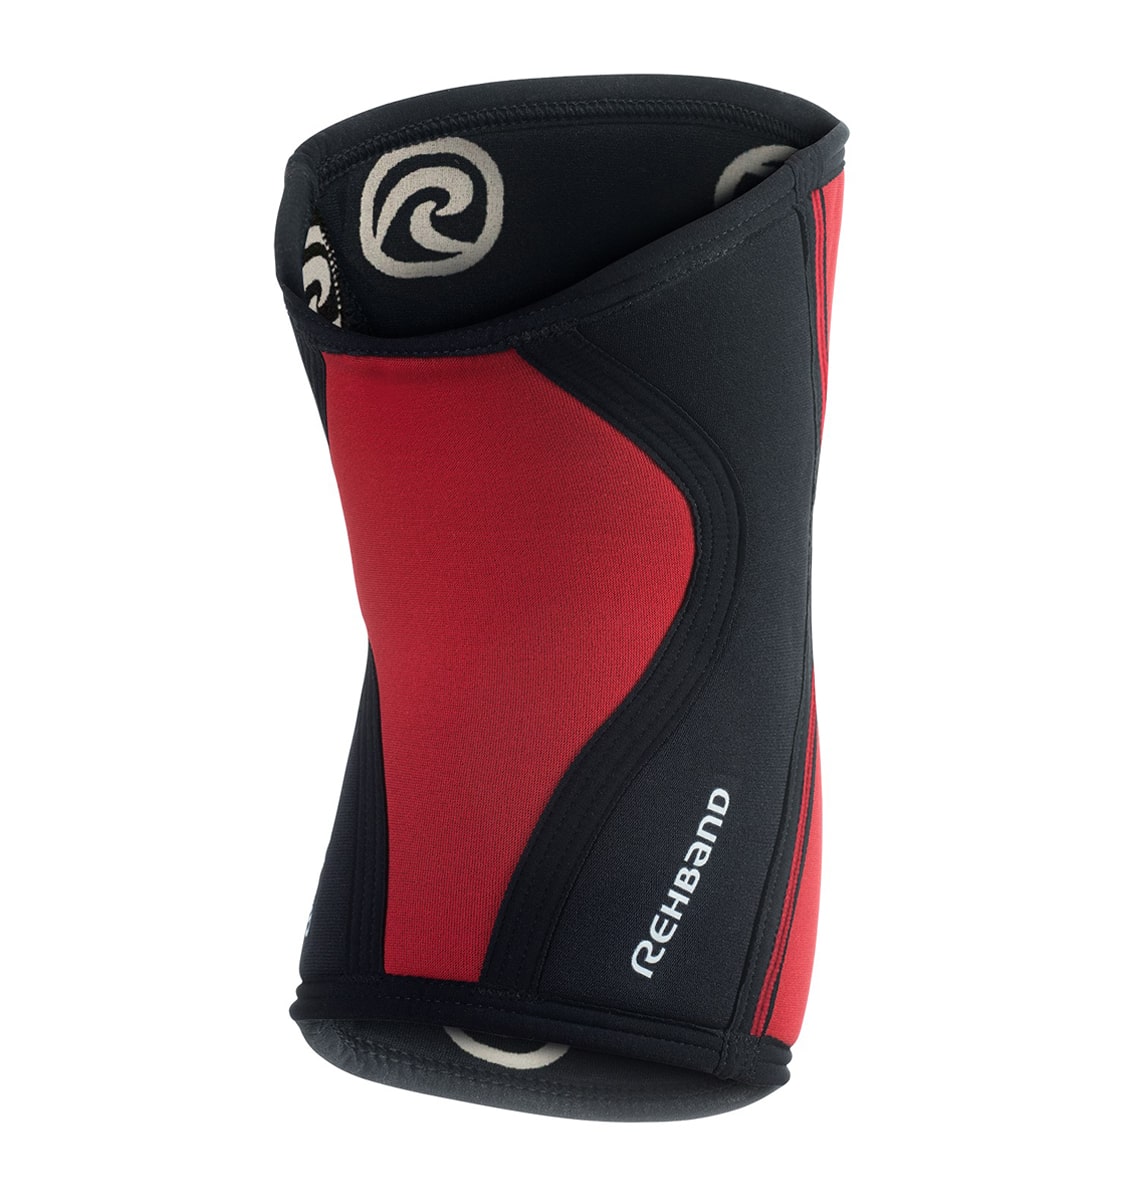 105304-01 - Rehband Rx Knee Sleeve - Red/Black - 5mm - Back